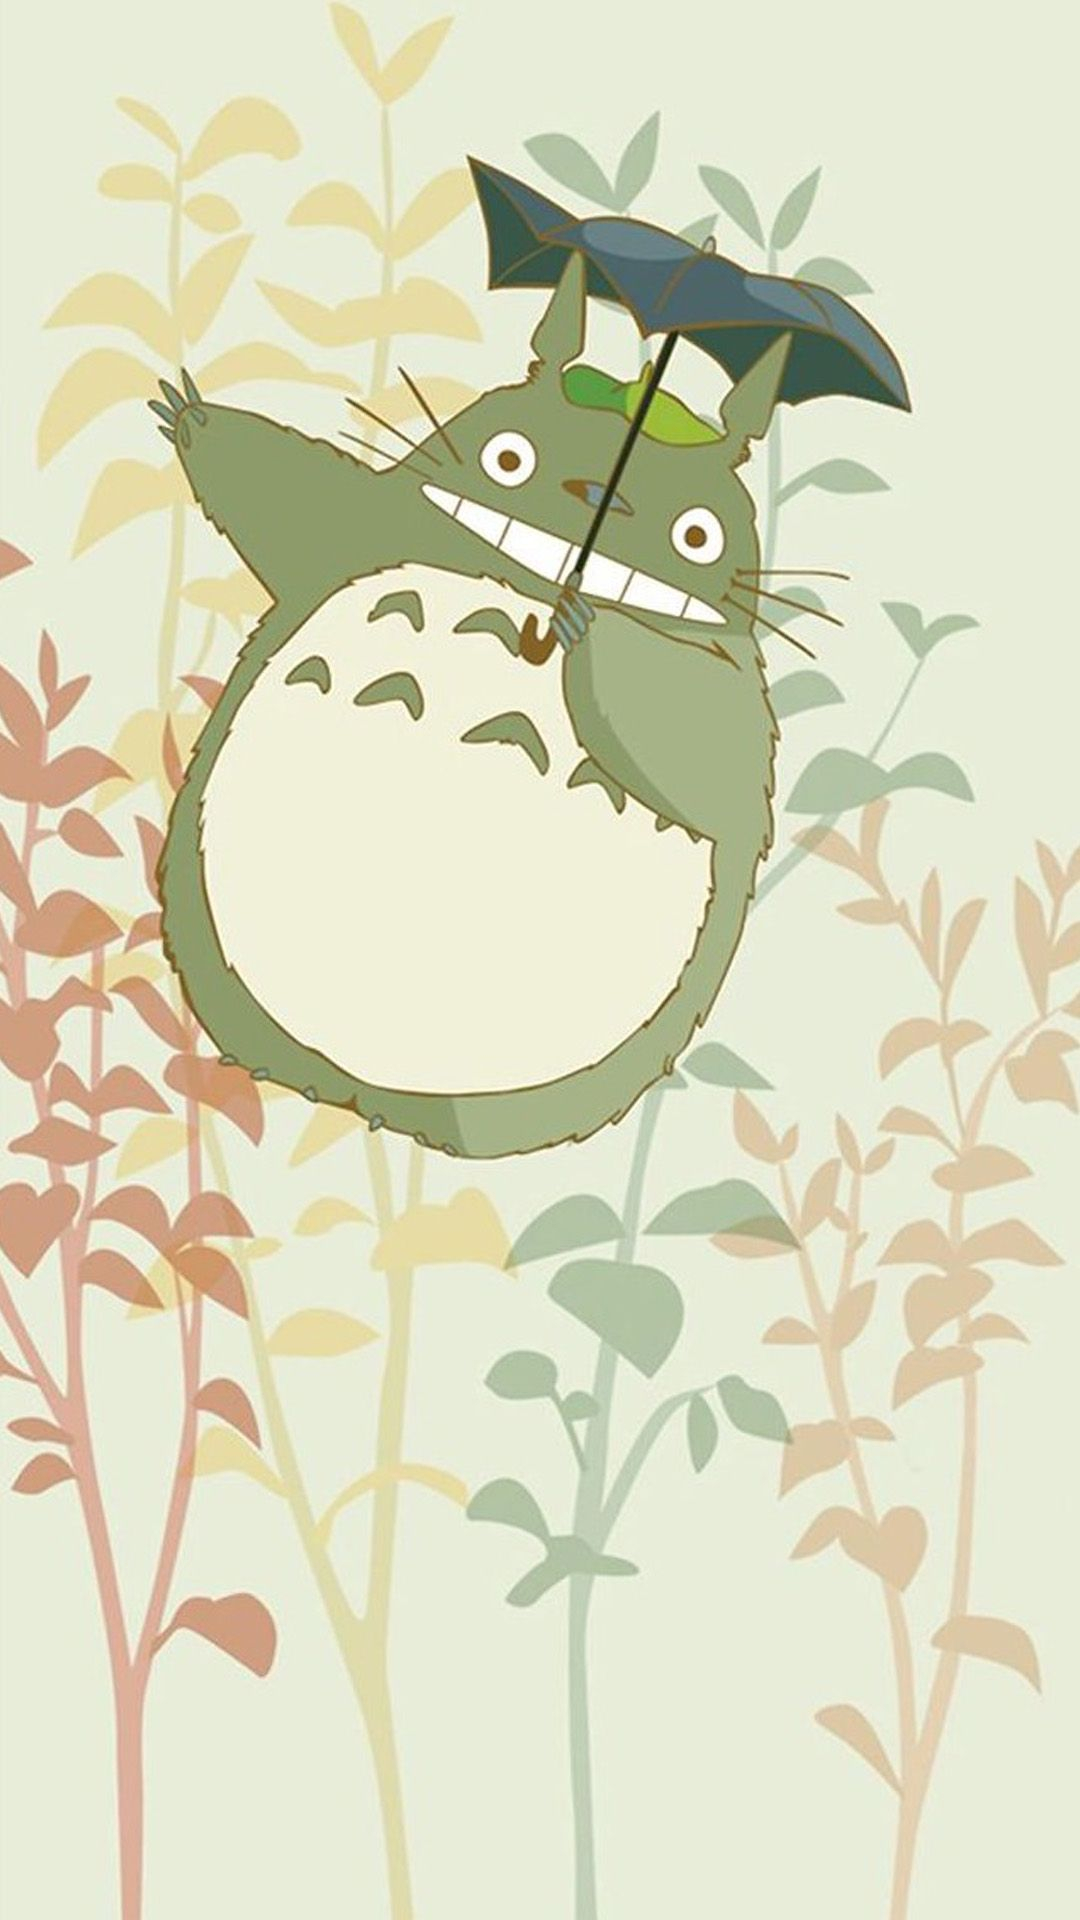 1080x1920 Cute My Neighbor Totoro iPhone 6 Wallpaper Download | iPhone Wallpapers, iPad wallpapers One-stop Download | Totoro art, Totoro, Studio ghibli art